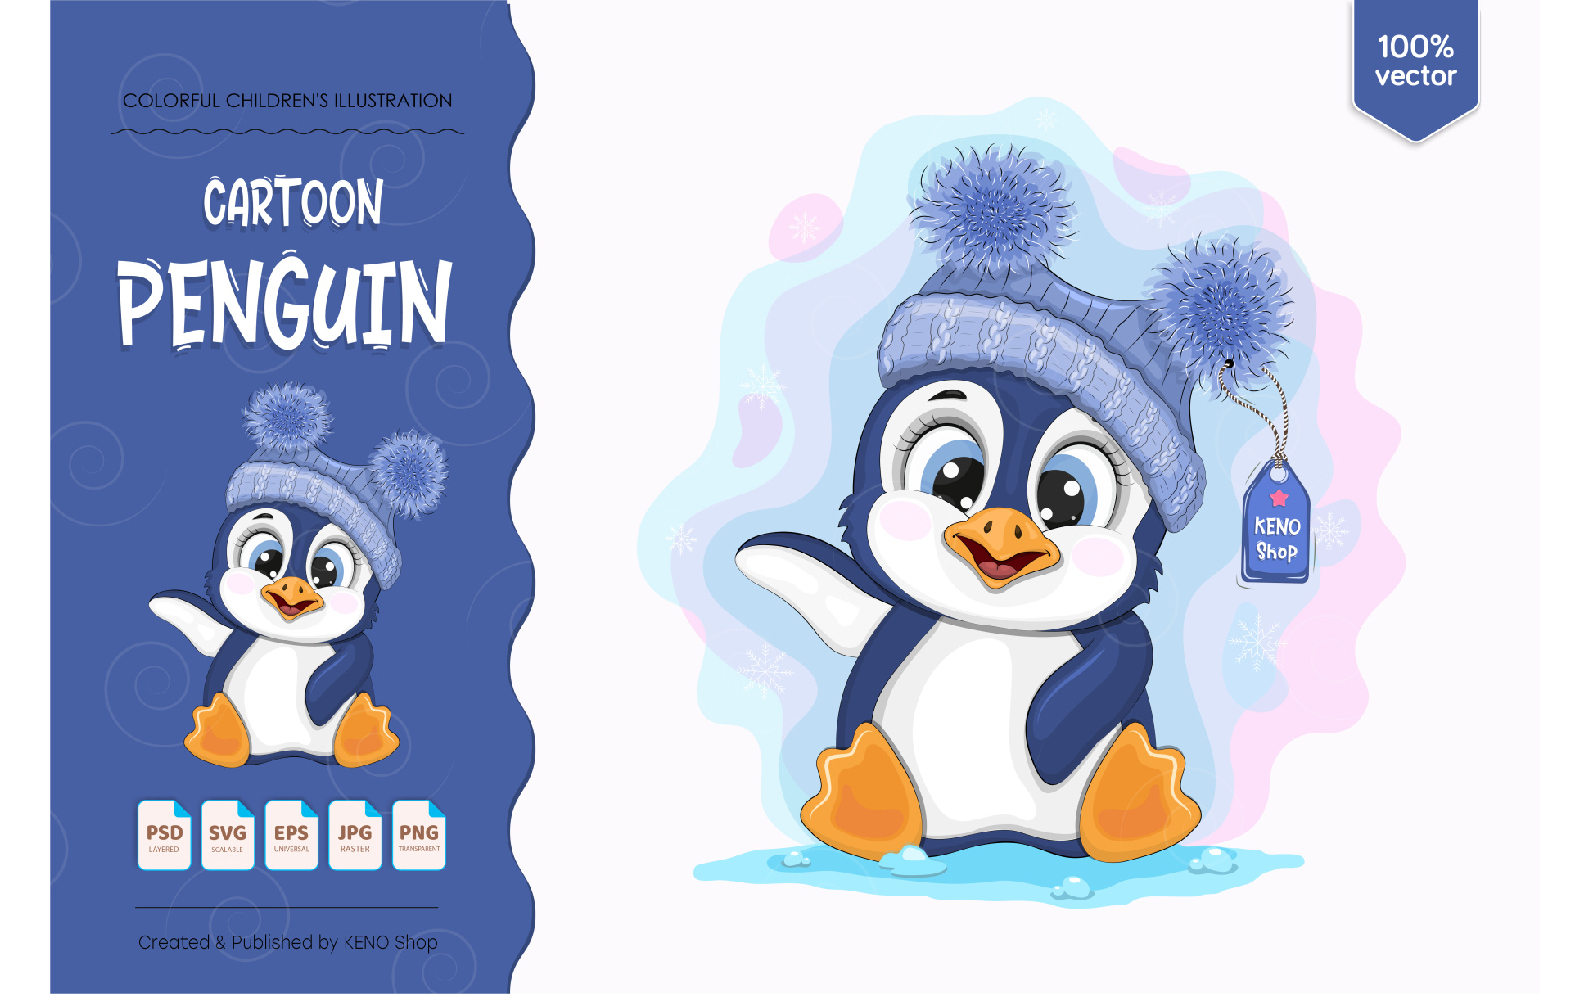 Cute Cartoon Penguin - Vector Image